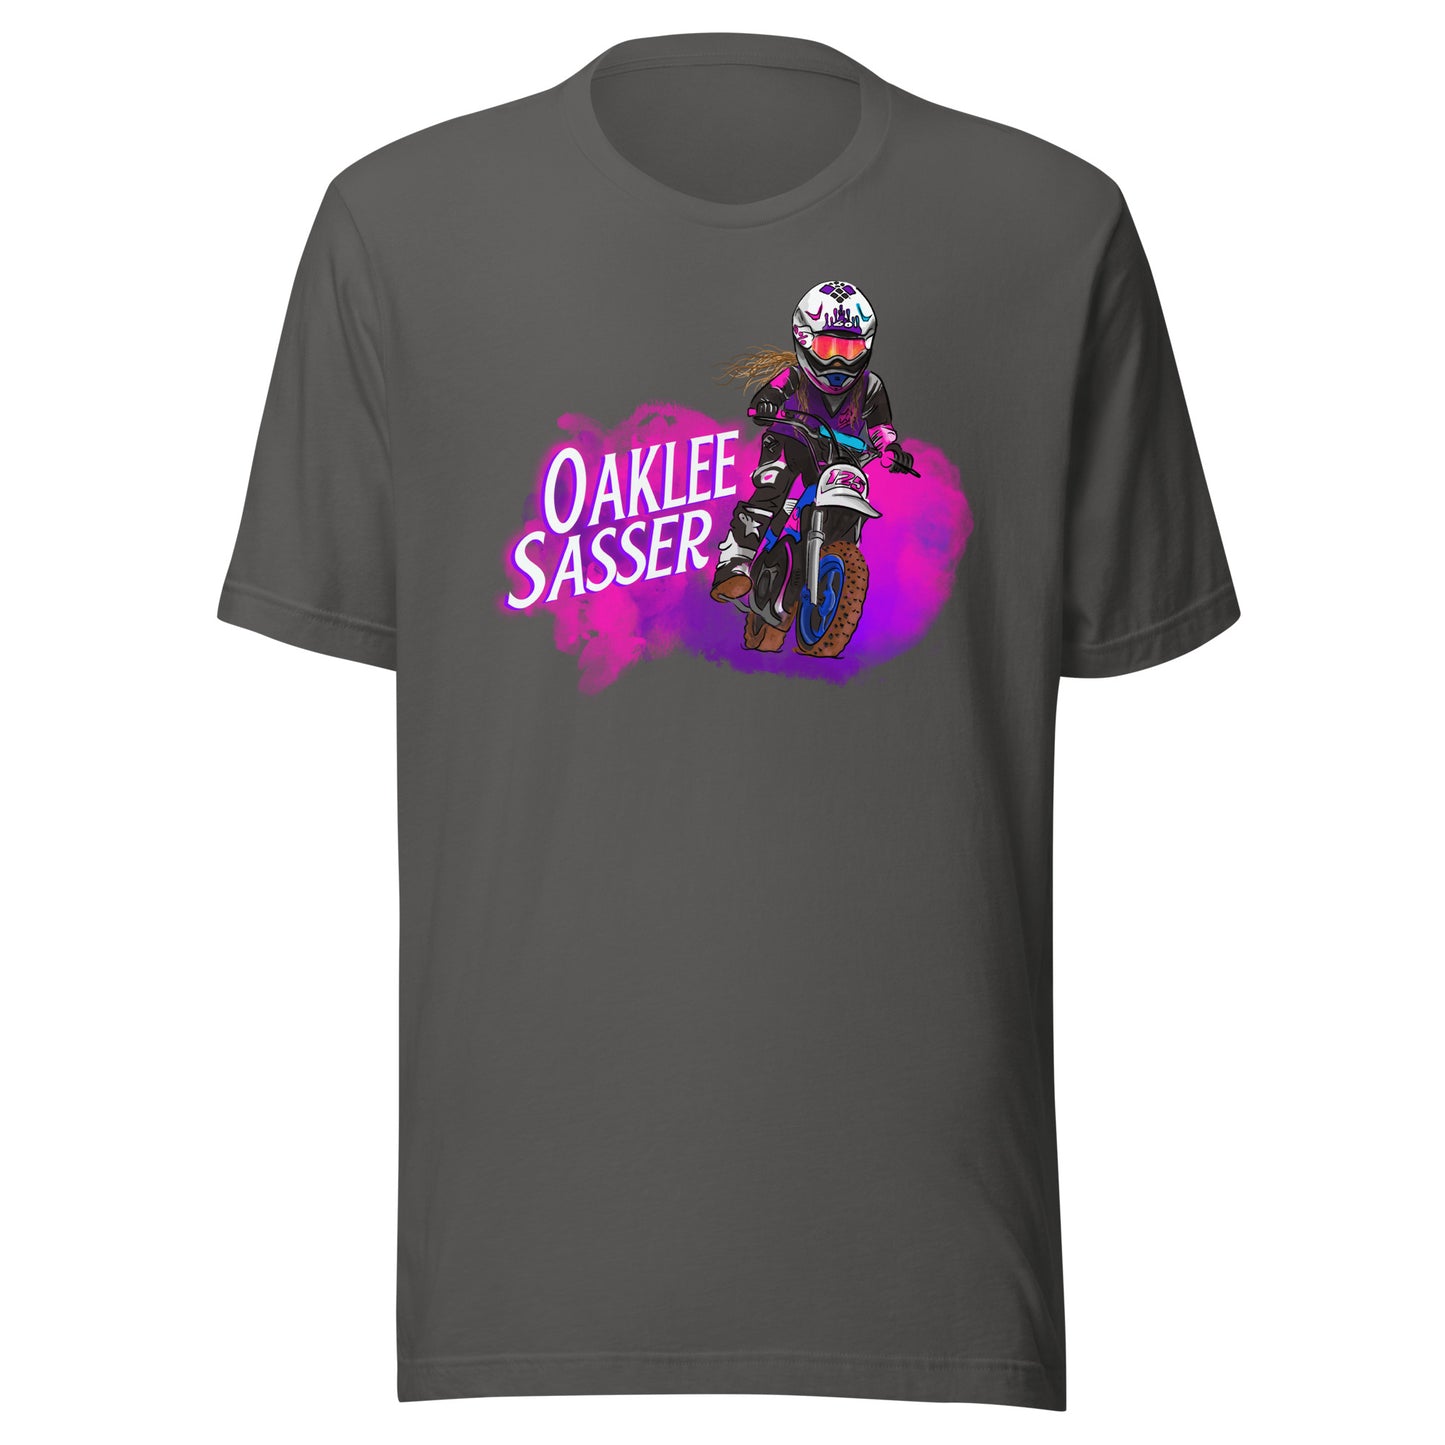 Oaklee Sasser T-Shirt